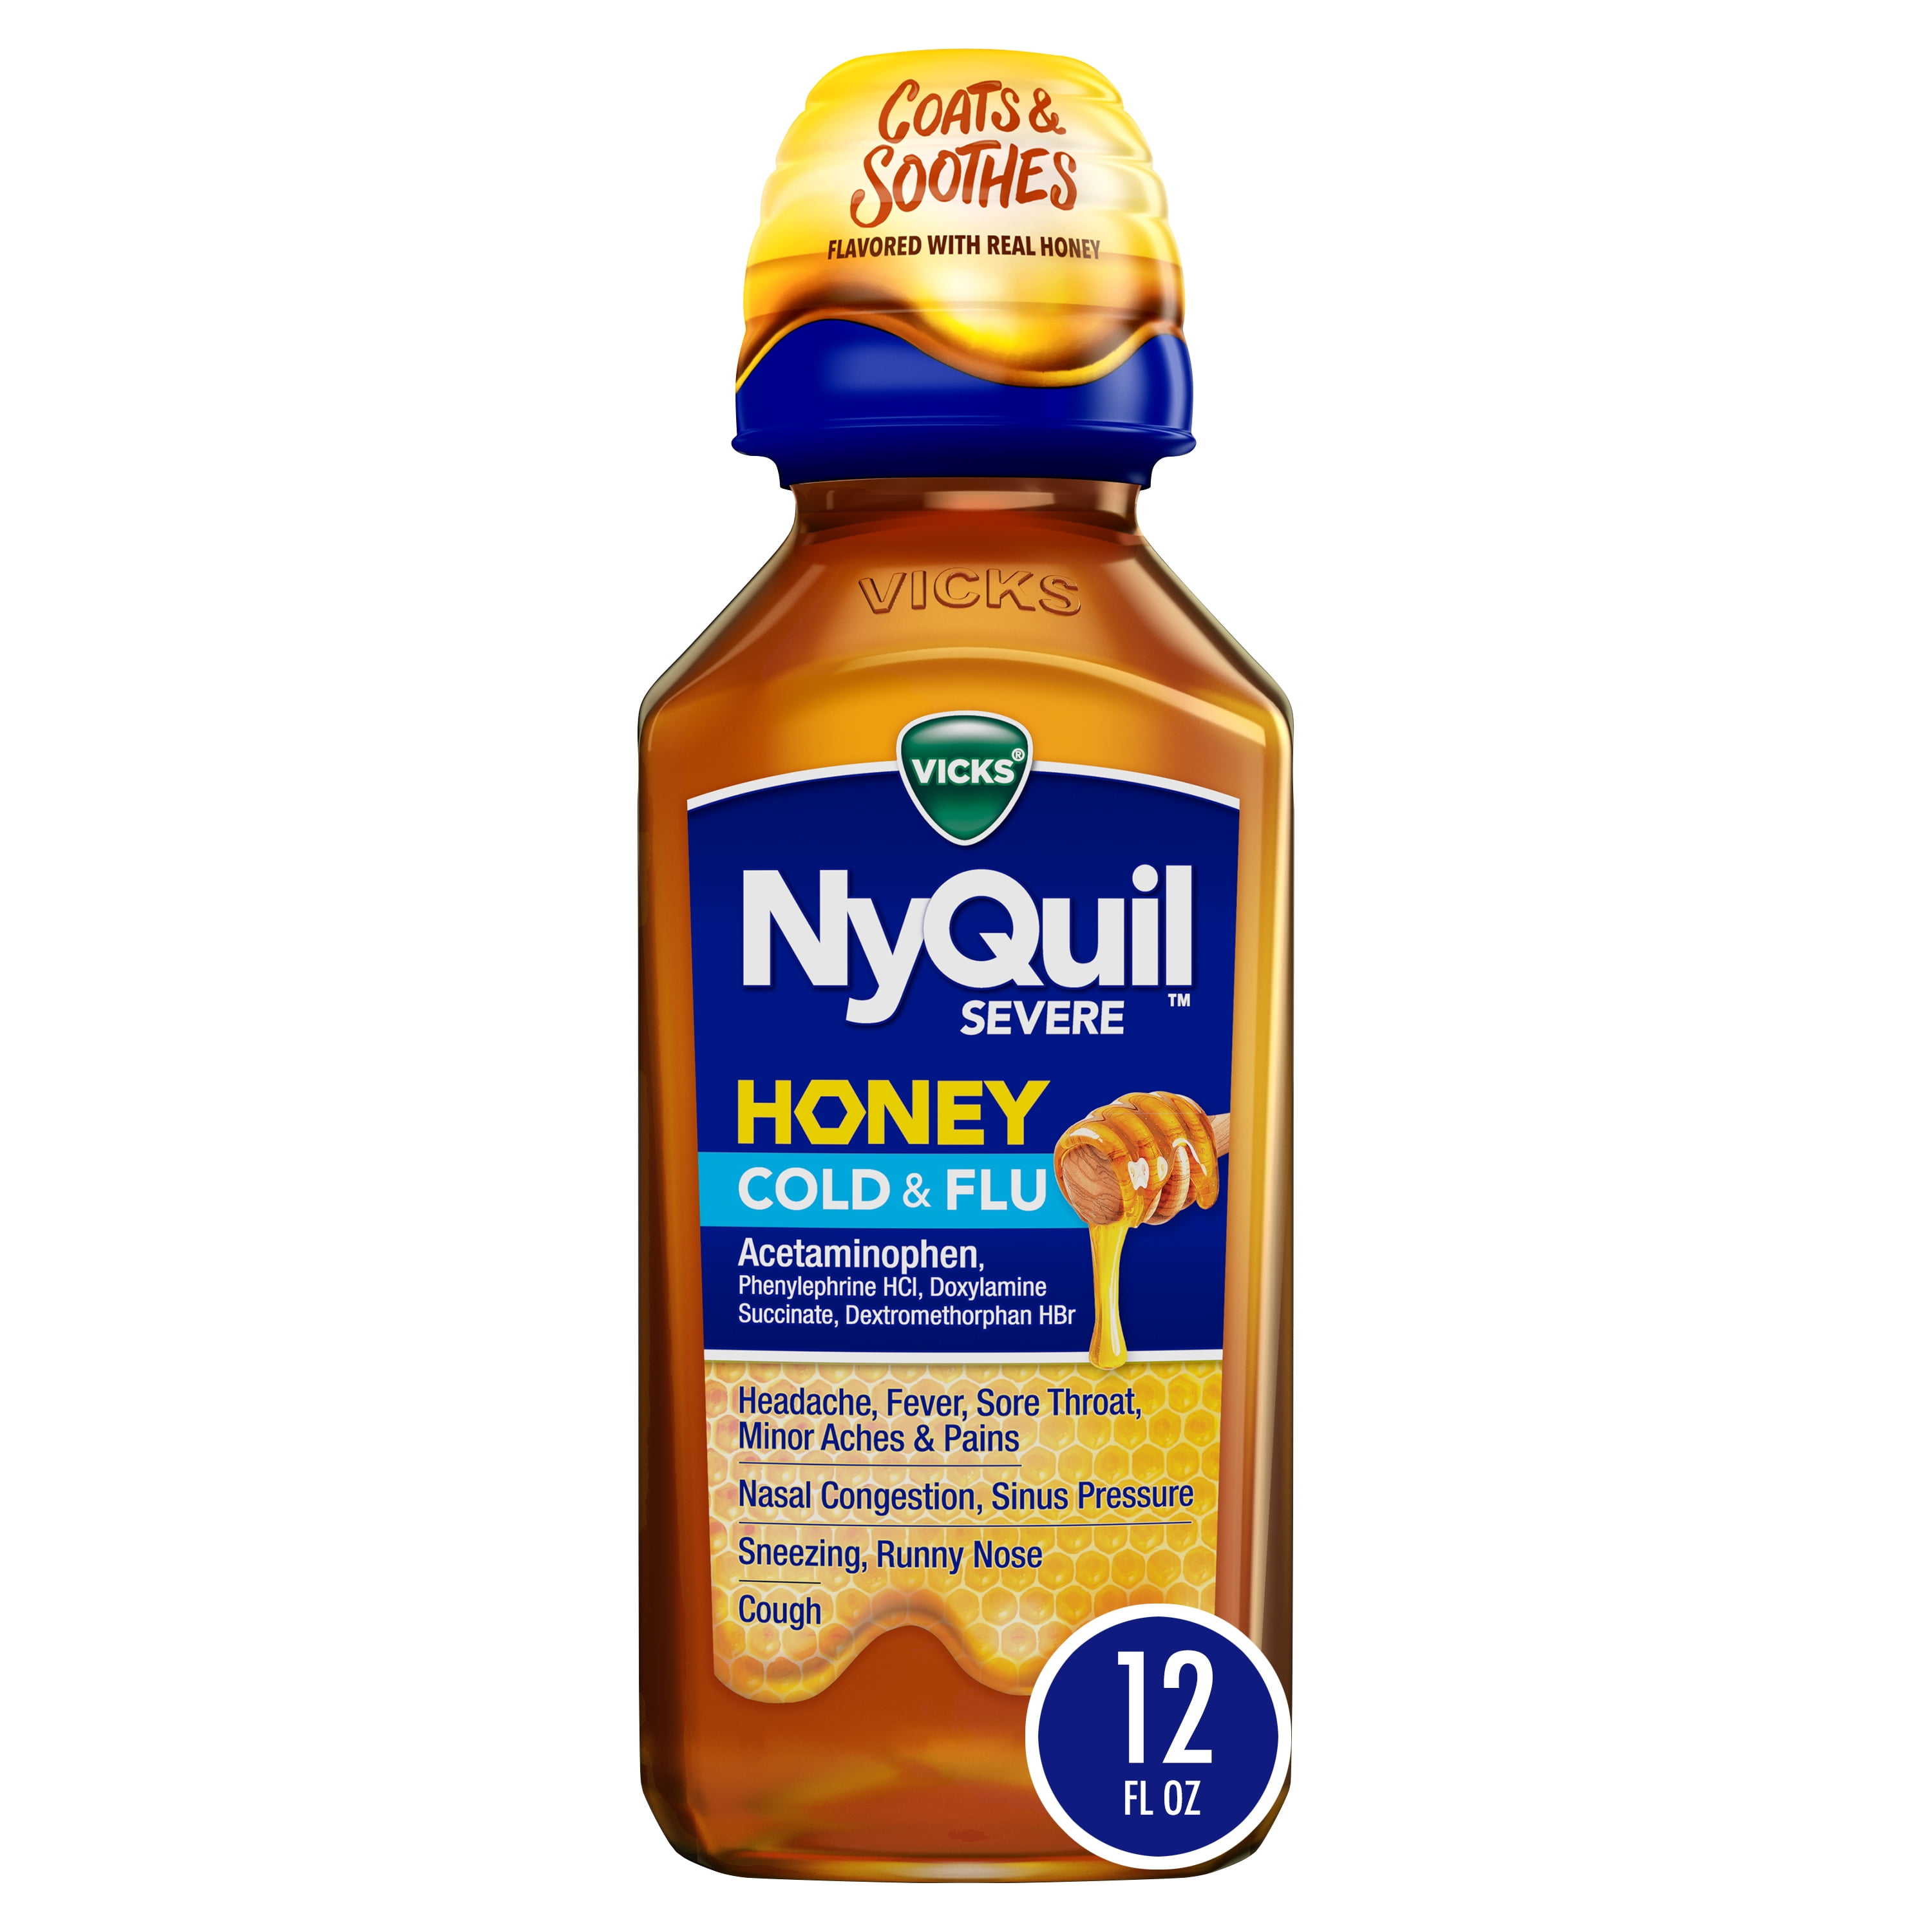 Vicks NyQuil Severe Honey Cold, Cough and Flu Liquid Medicine, 12 fl oz